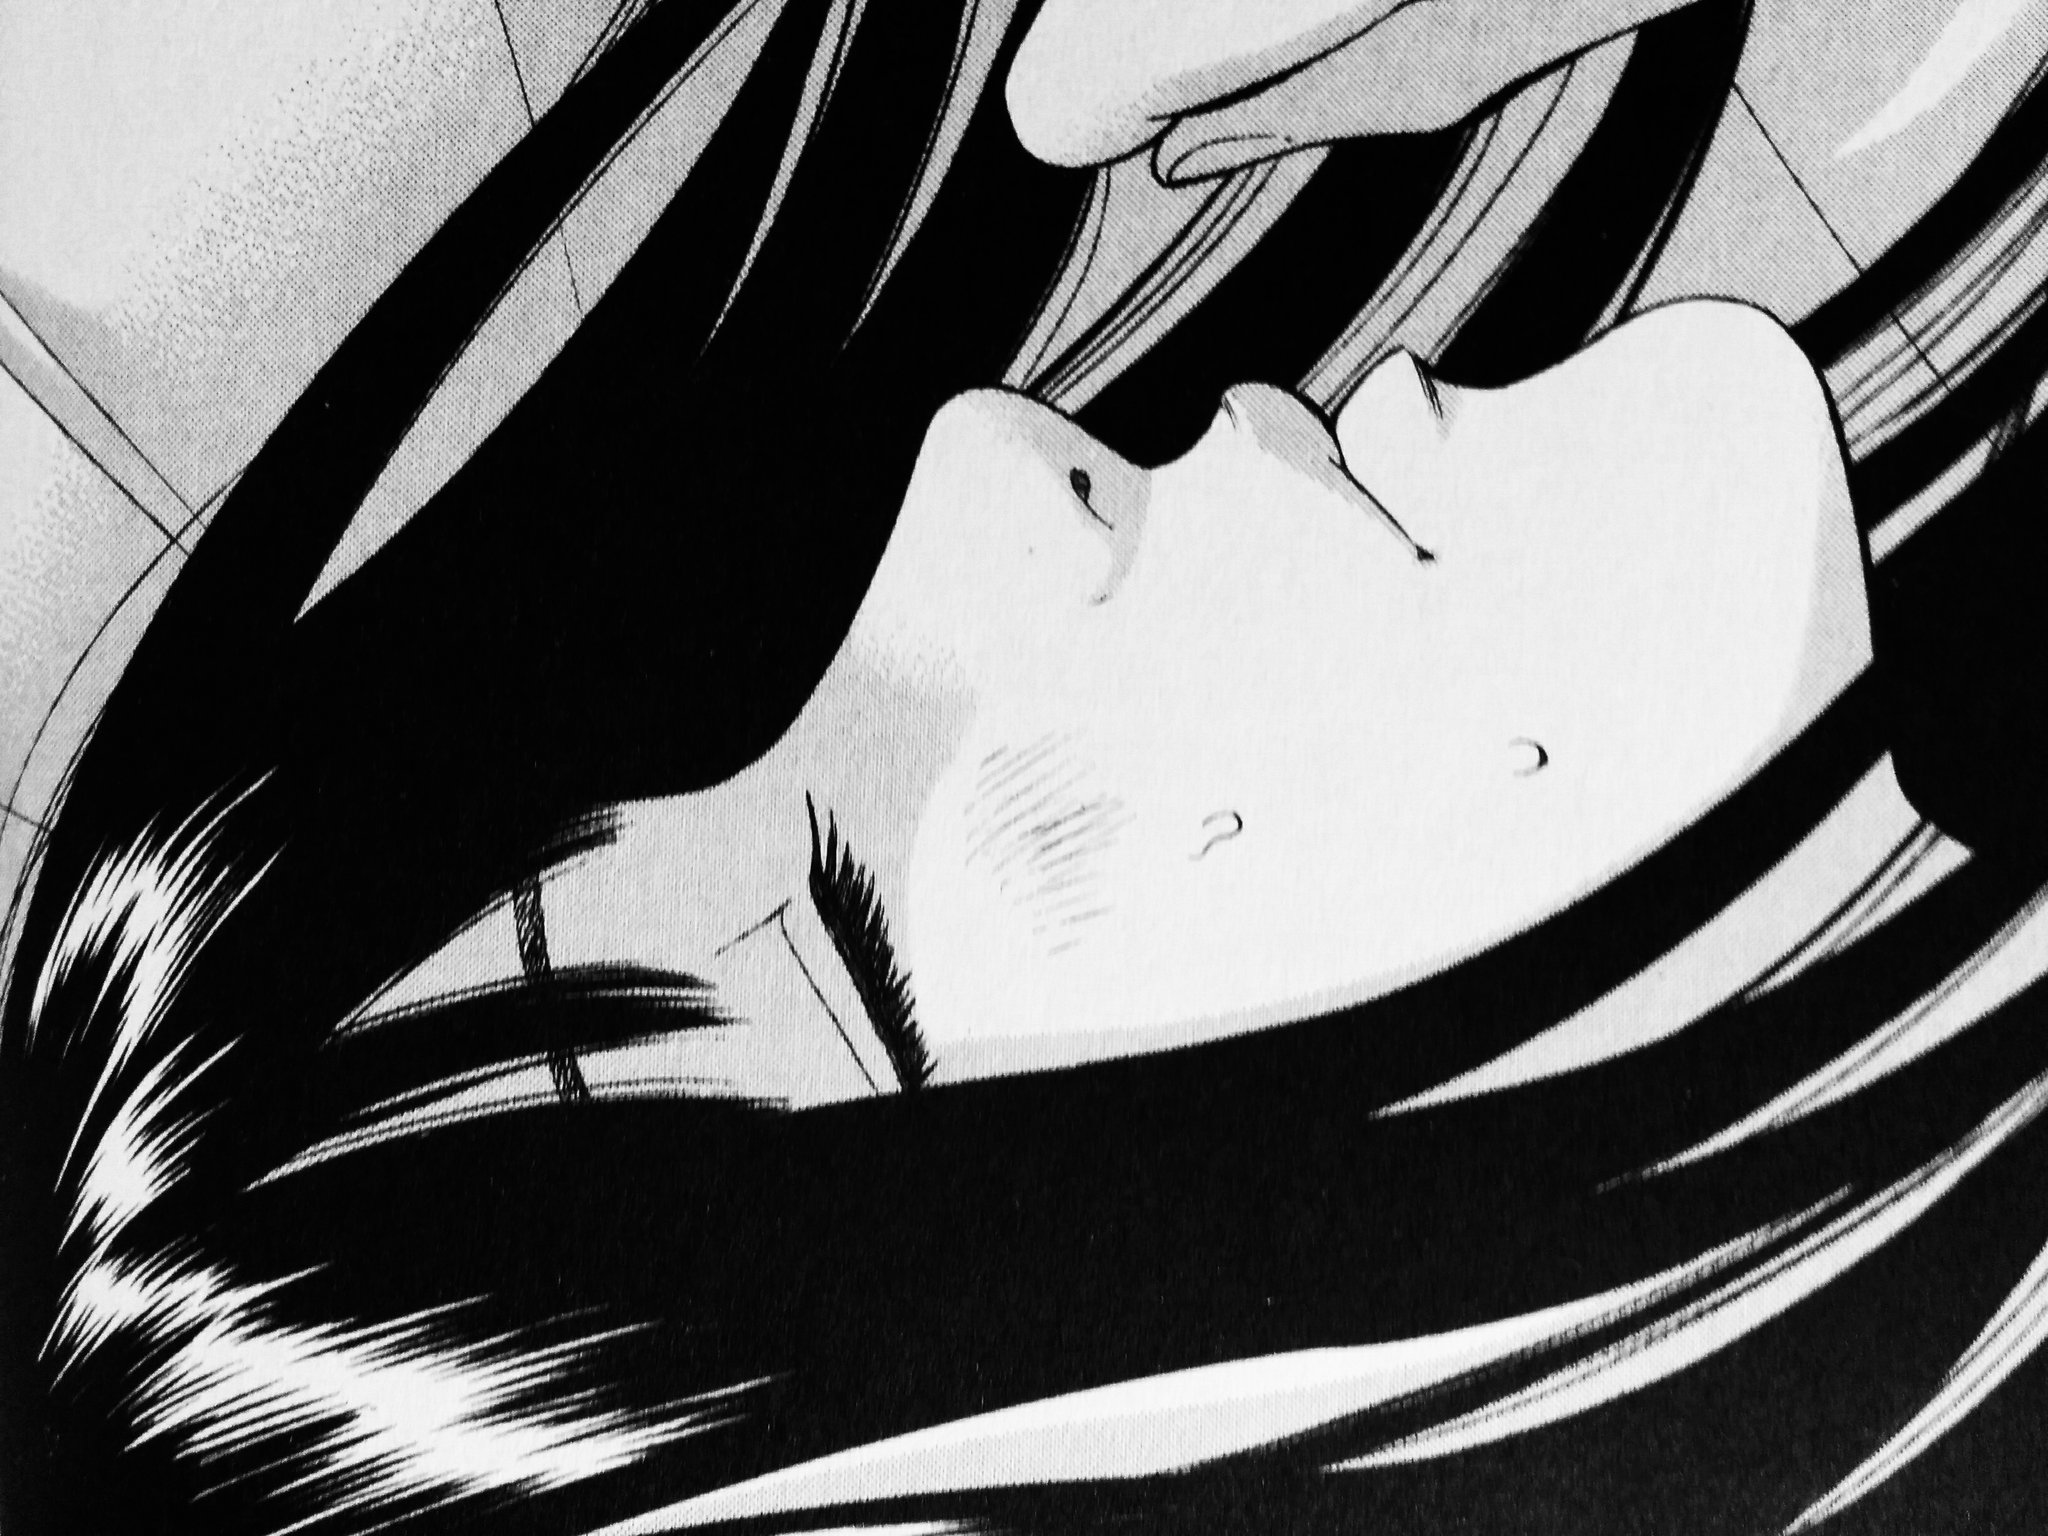 Remi Sleeping Rin リン Haroldsakuishi Sakuishiharold ハロルド作石 Comics Manga コミック 漫画 T Co L9dg7conop